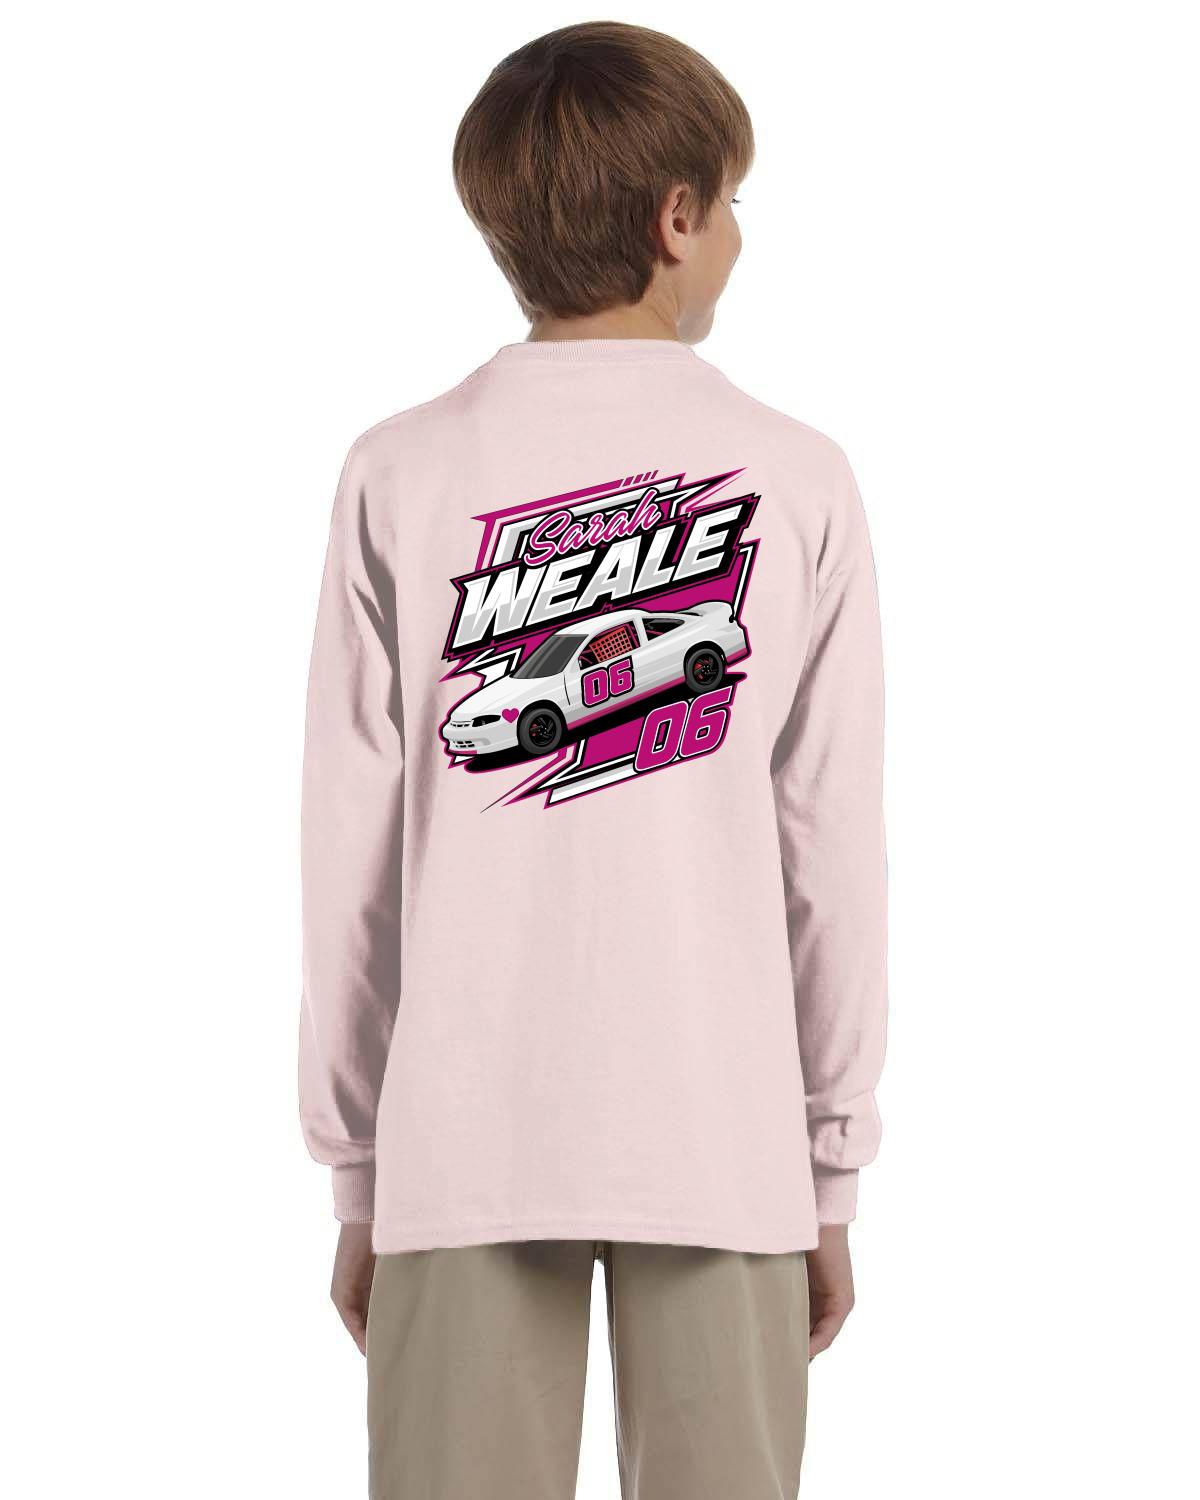 Sarah Weale Racing Youth Long-Sleeve T-Shirt